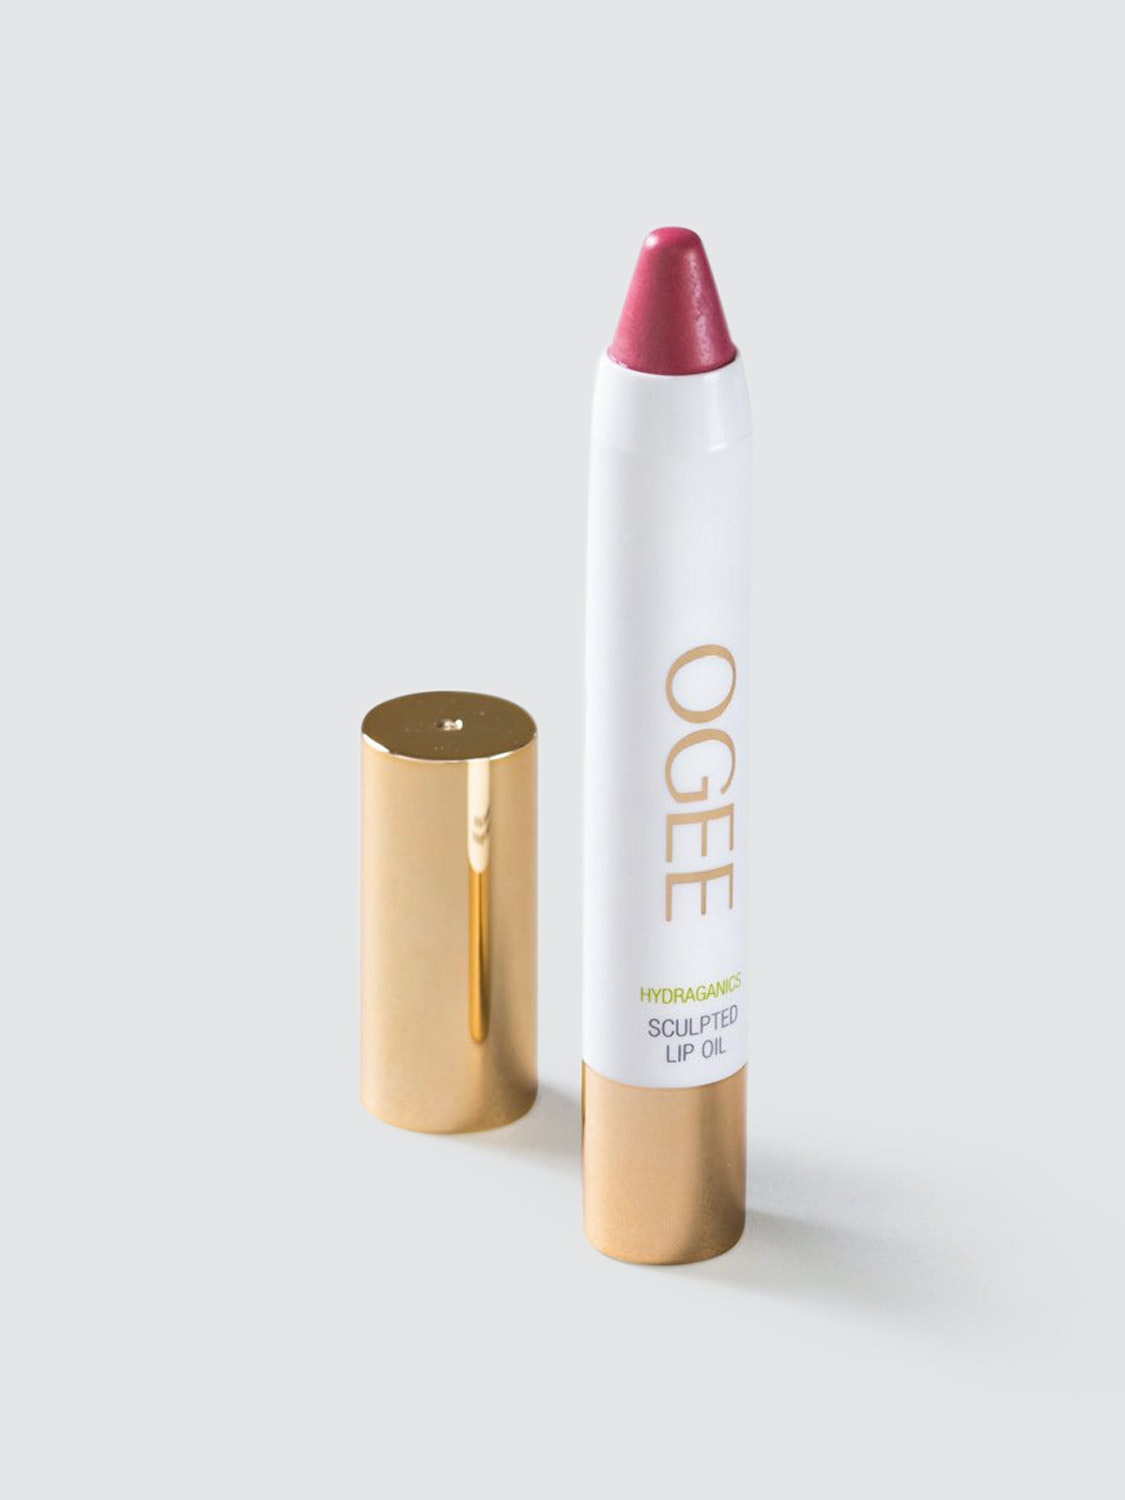 Ogee Sculpted lip oil